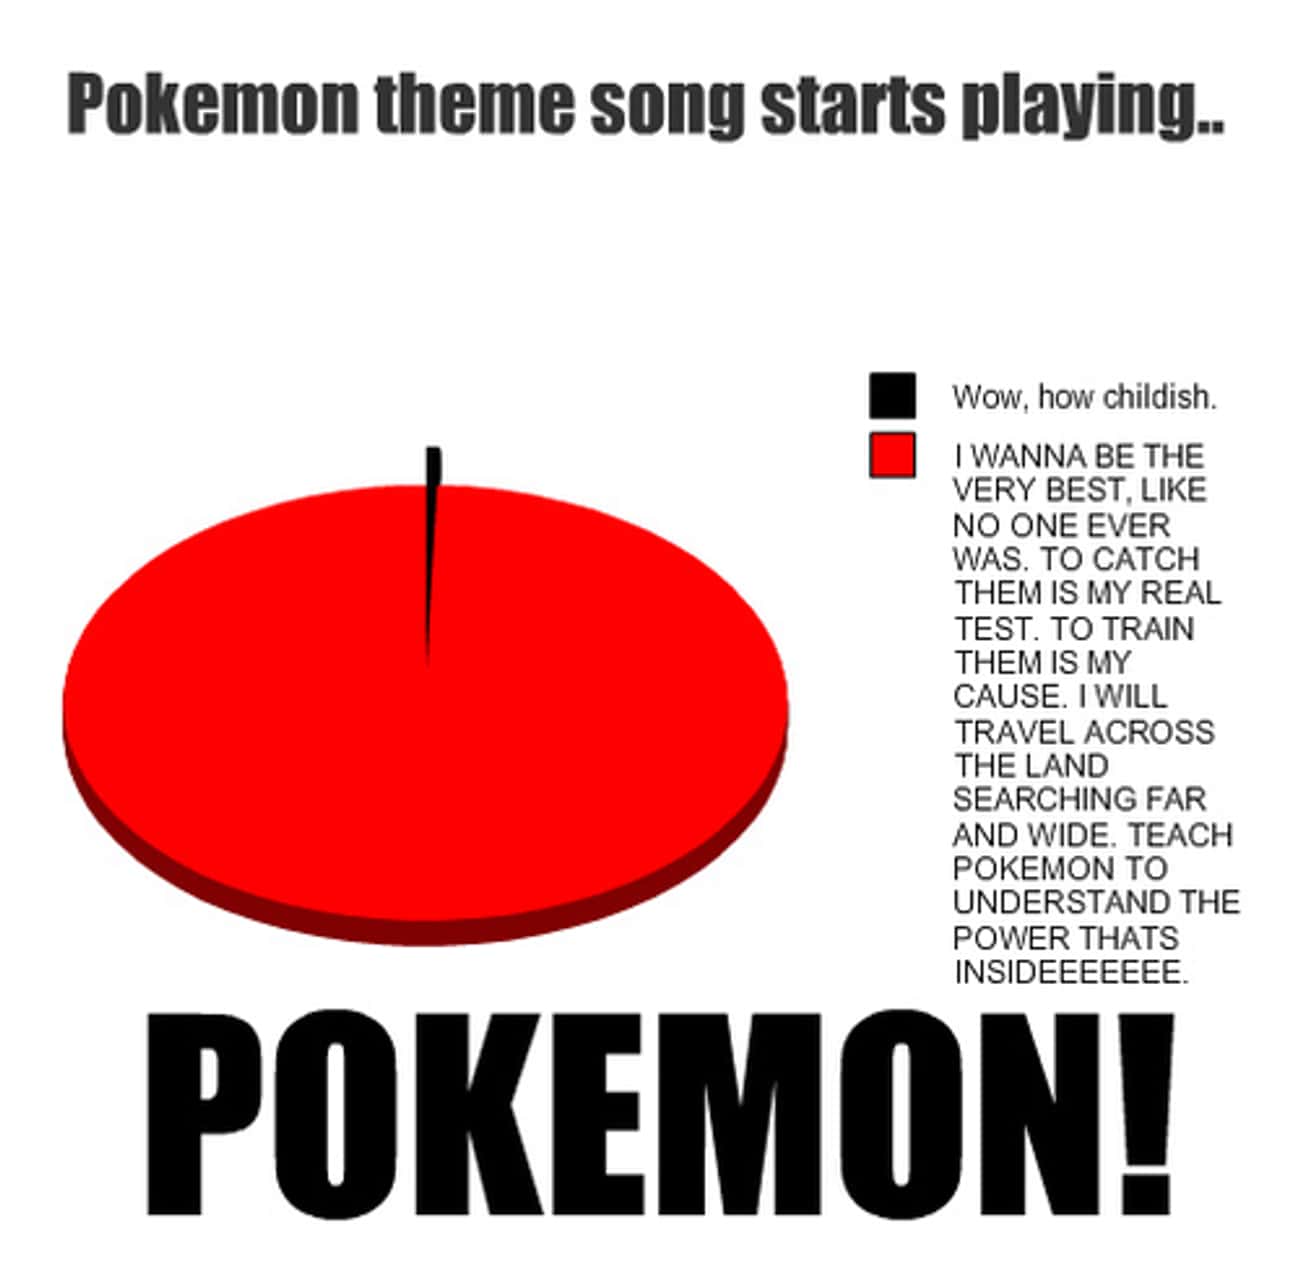 The lyrics of the original Pokemon theme for a meme